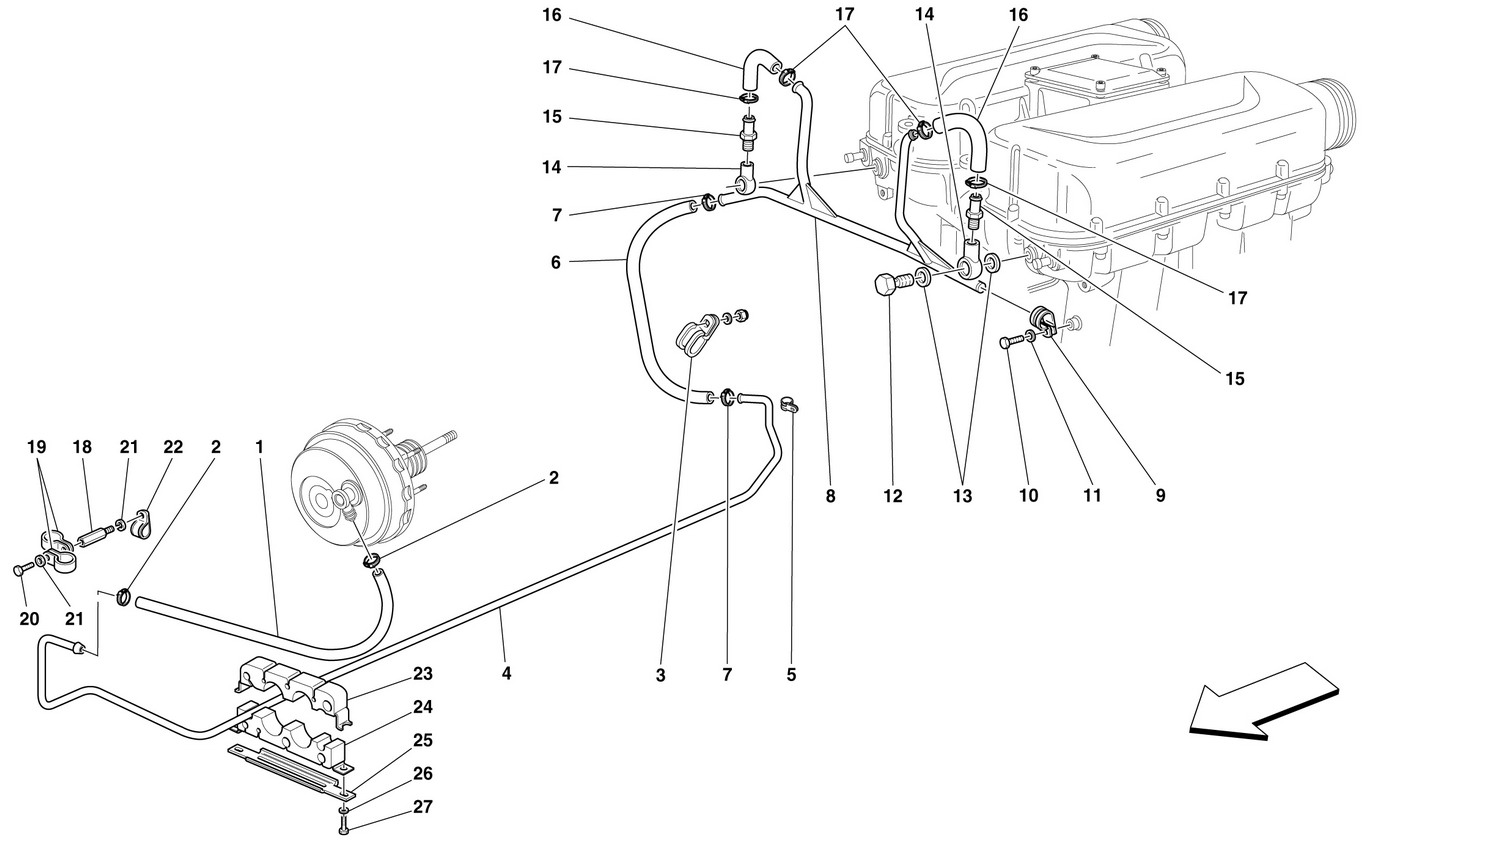 Schematic: Brake Booster System